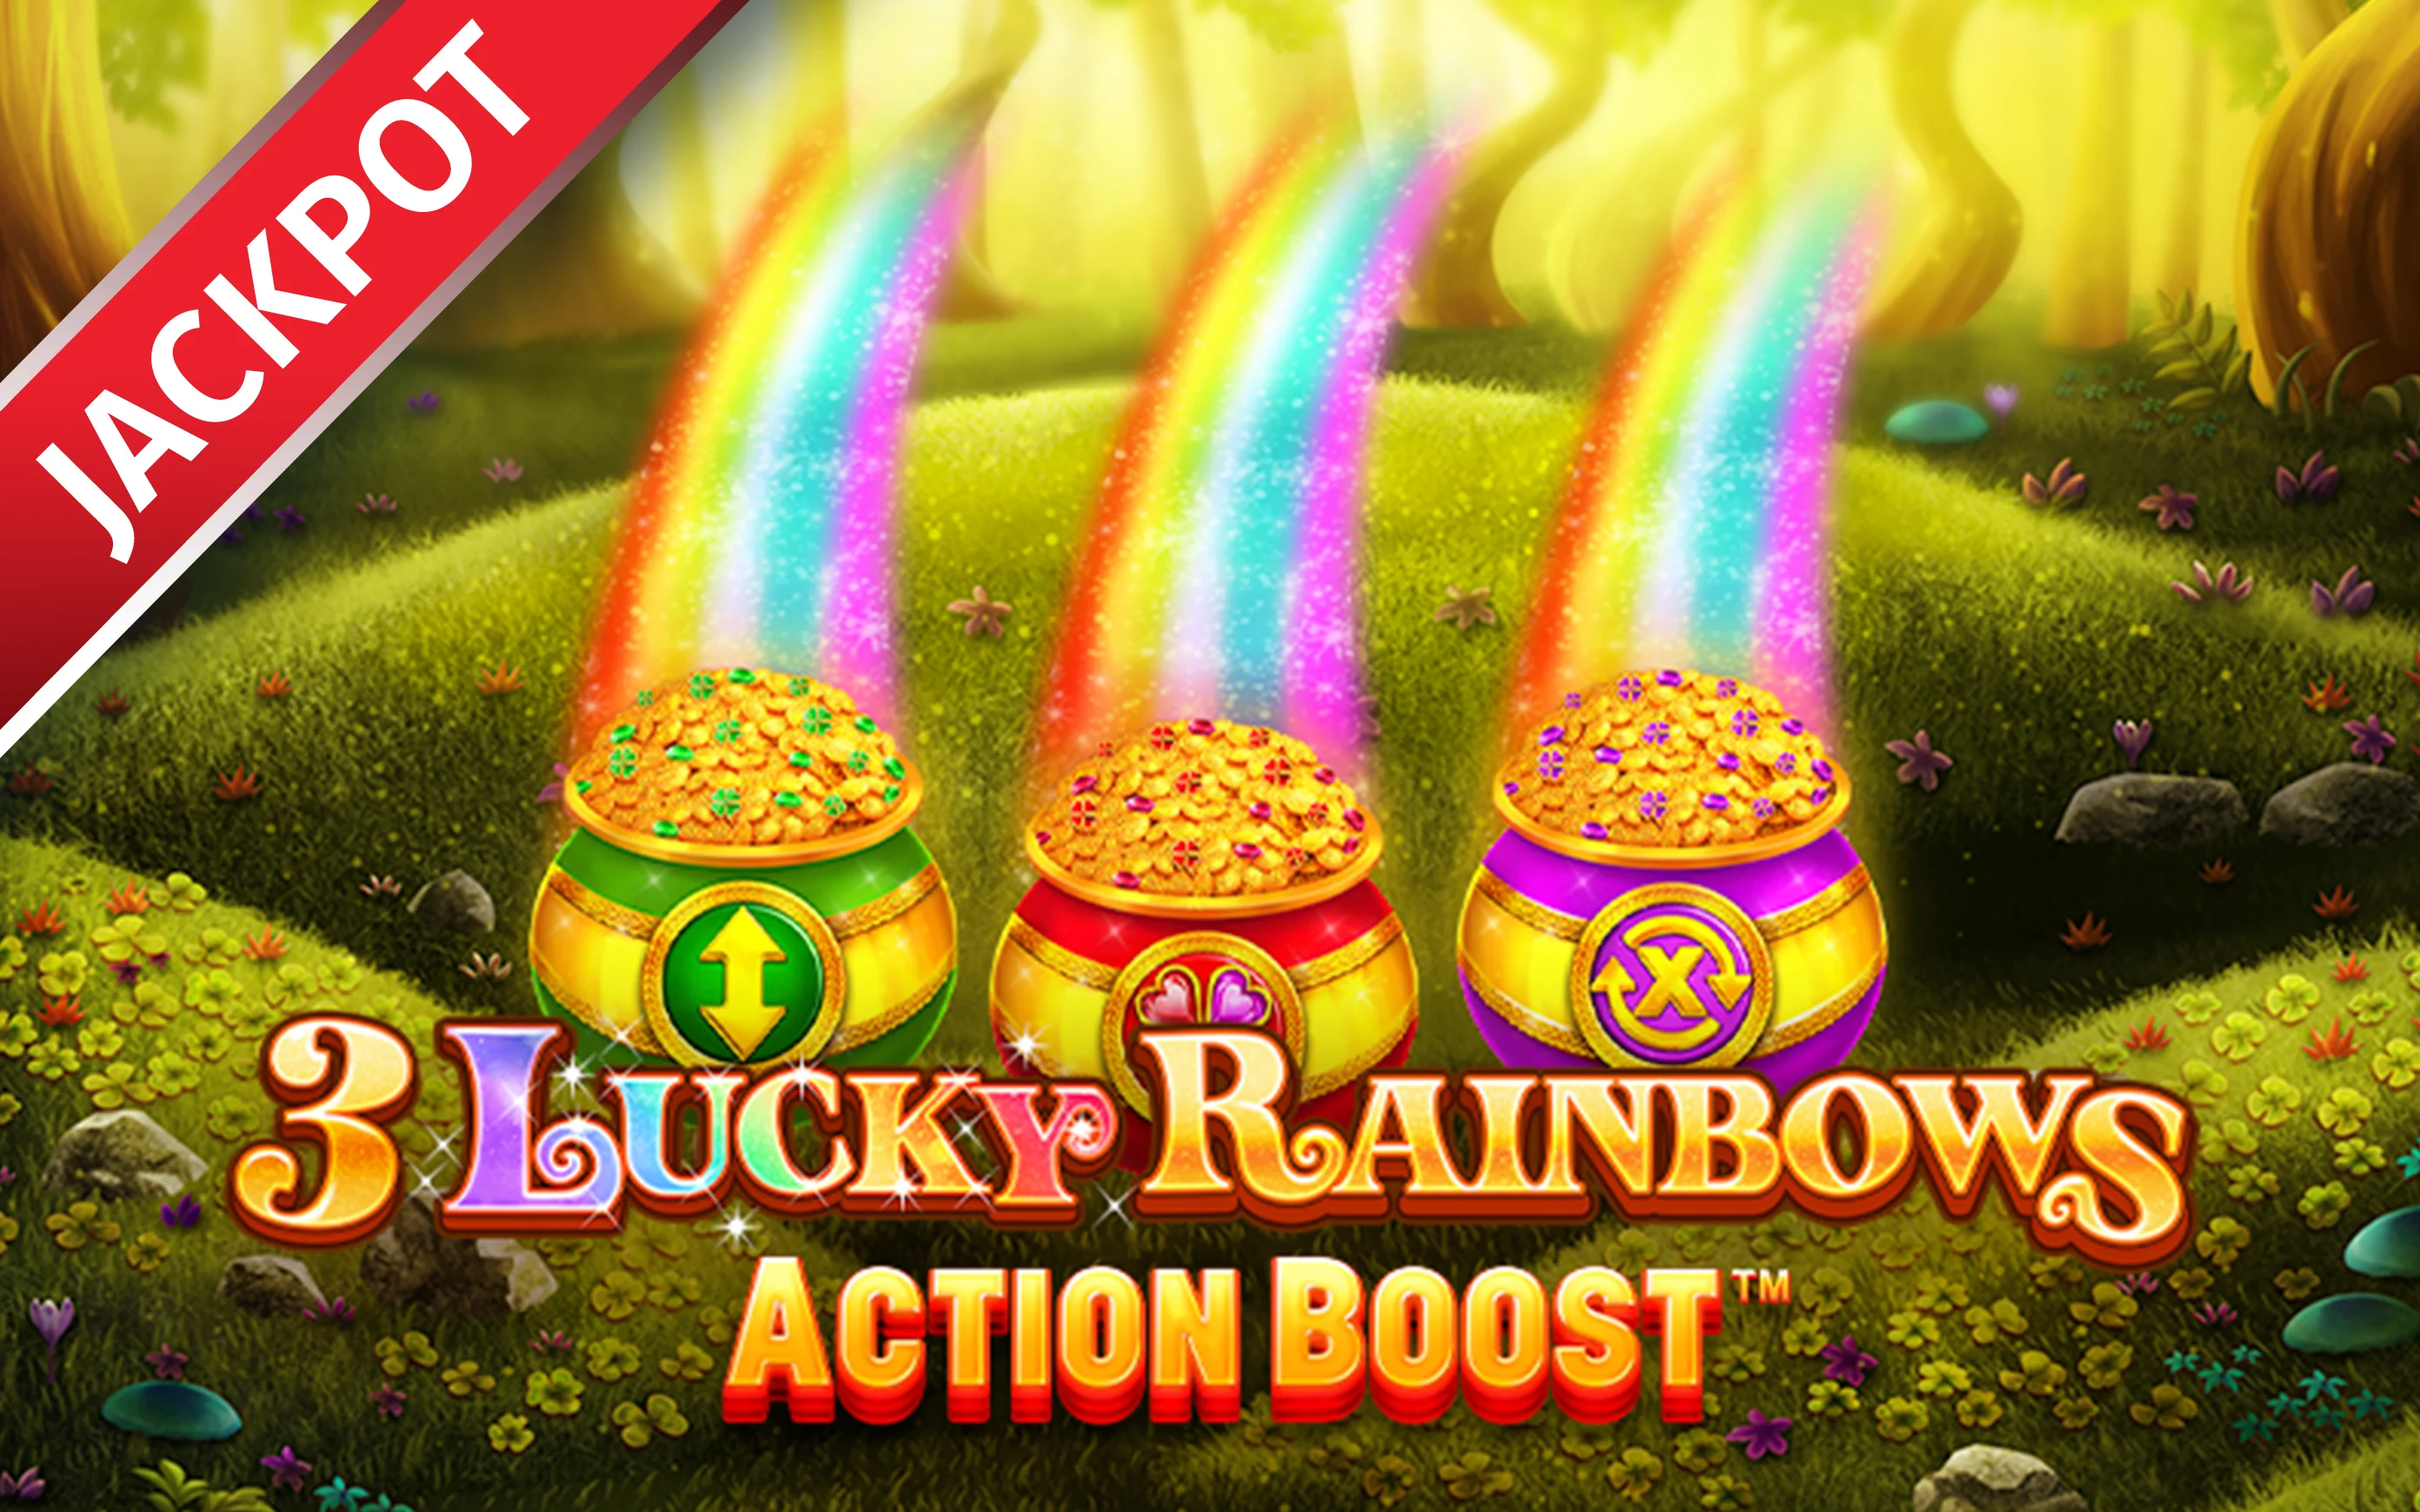 Грайте у Action Boost ™ 3 Lucky Rainbows в онлайн-казино Starcasino.be